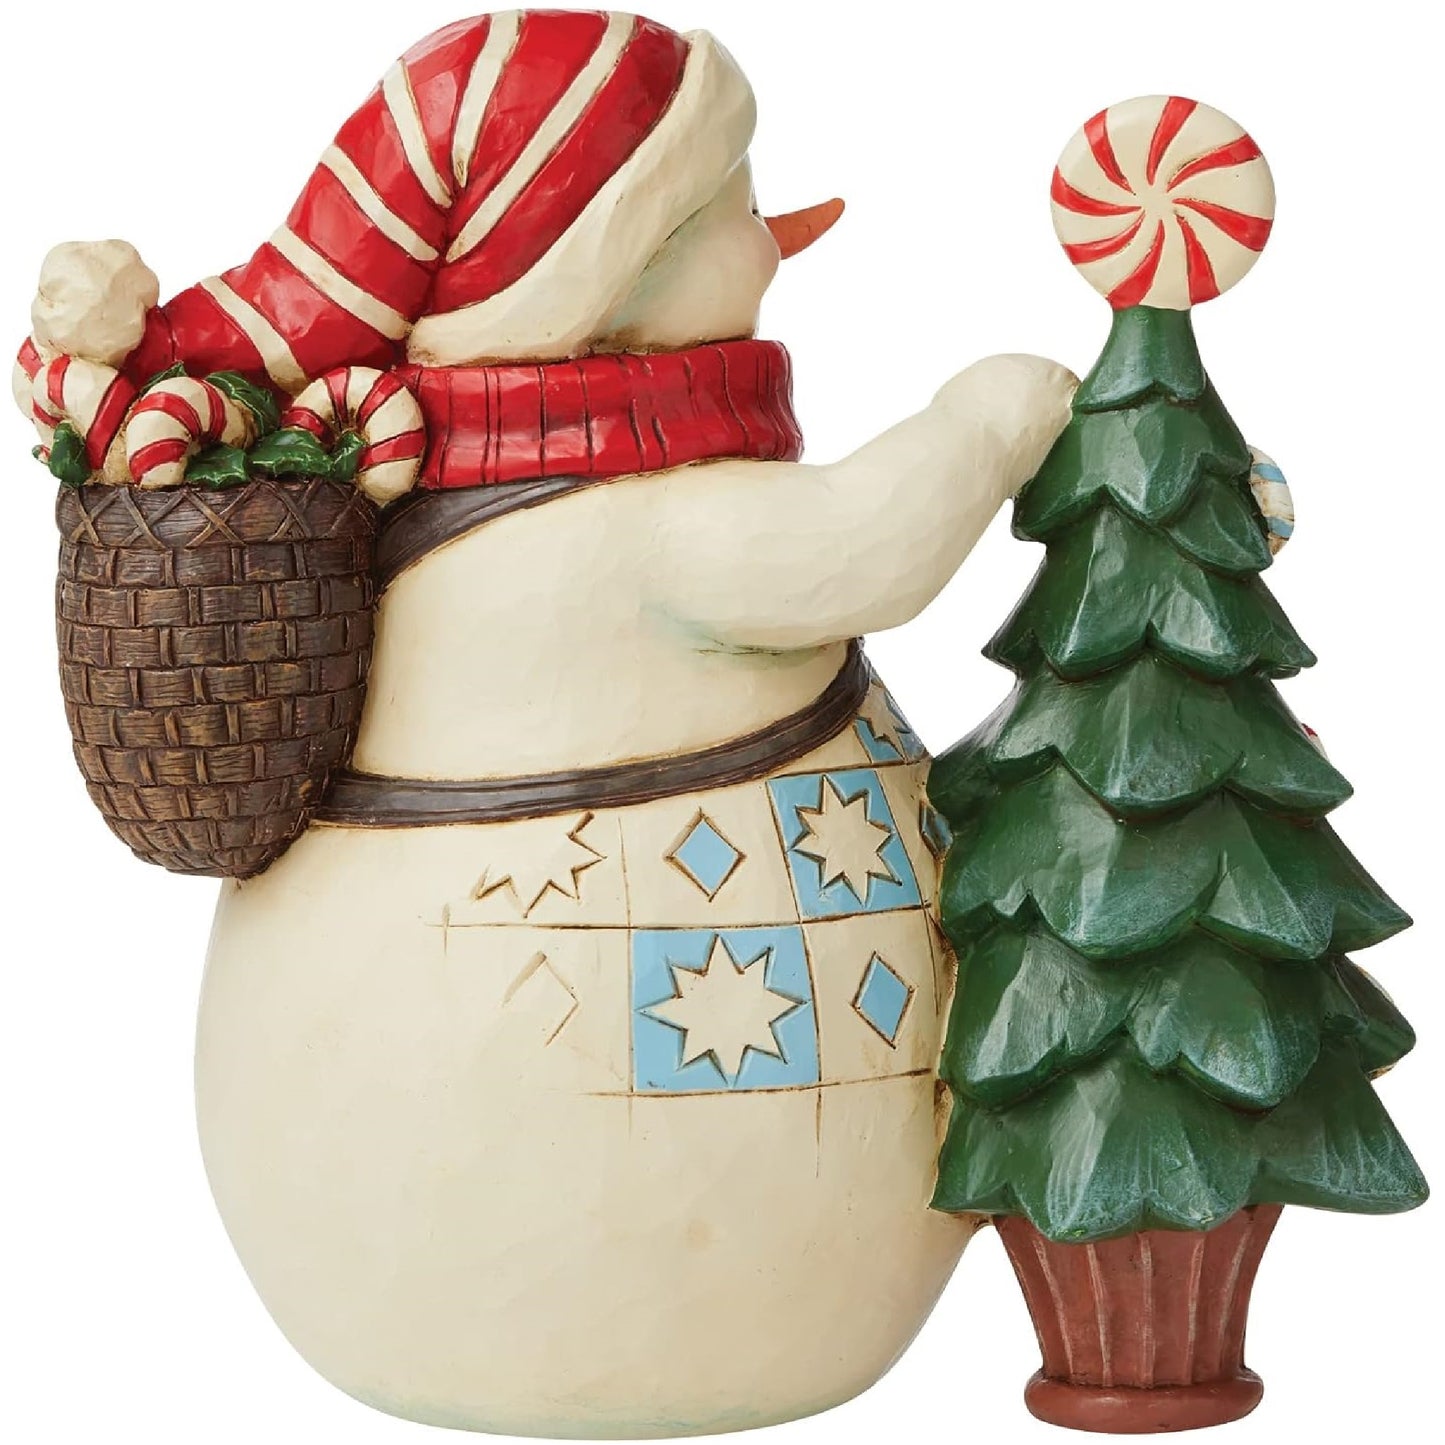 Jim Shore Bonhomme de neige avec Candy Cane Tree Hall marque exclusive « Sweet Christmas Traditions » 